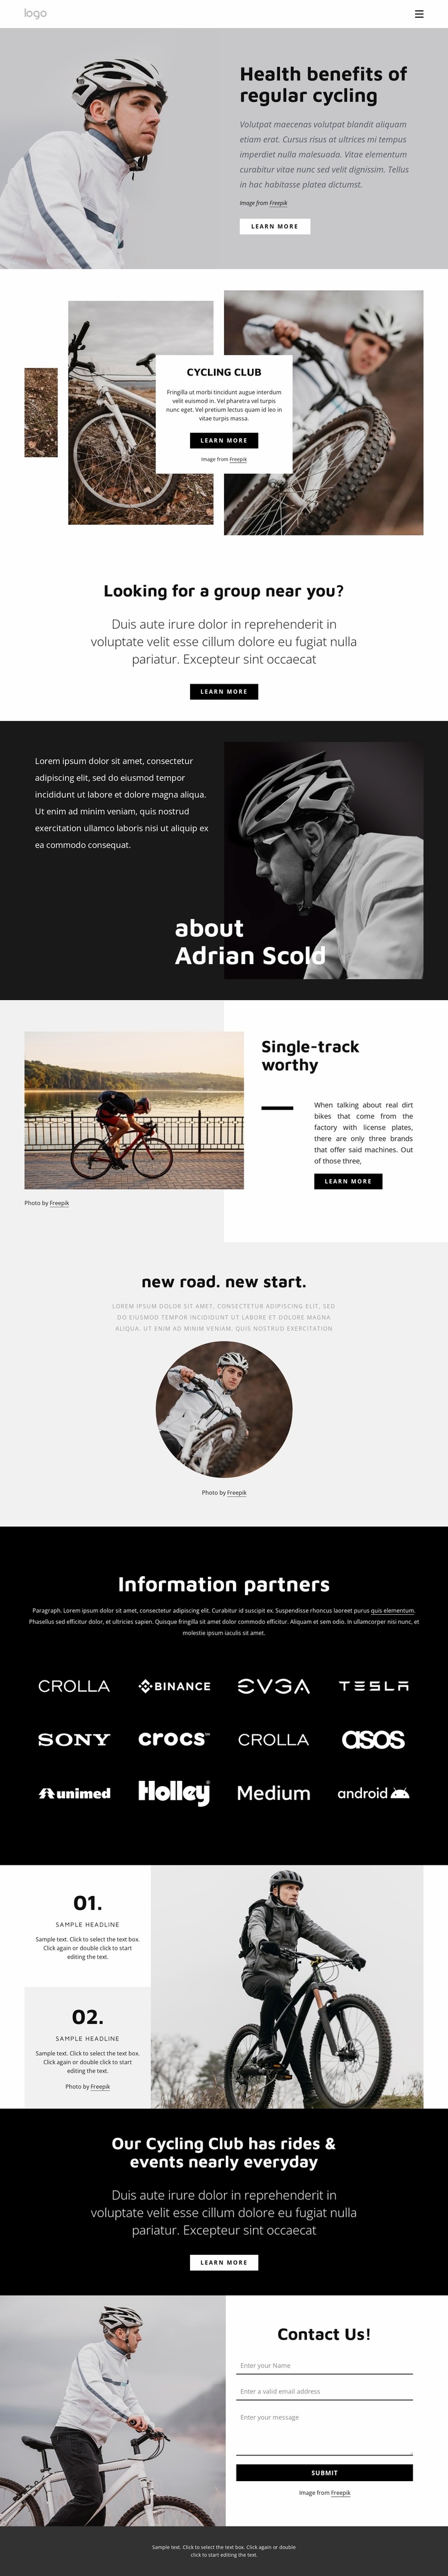 Benefits of regular cycling Website Design